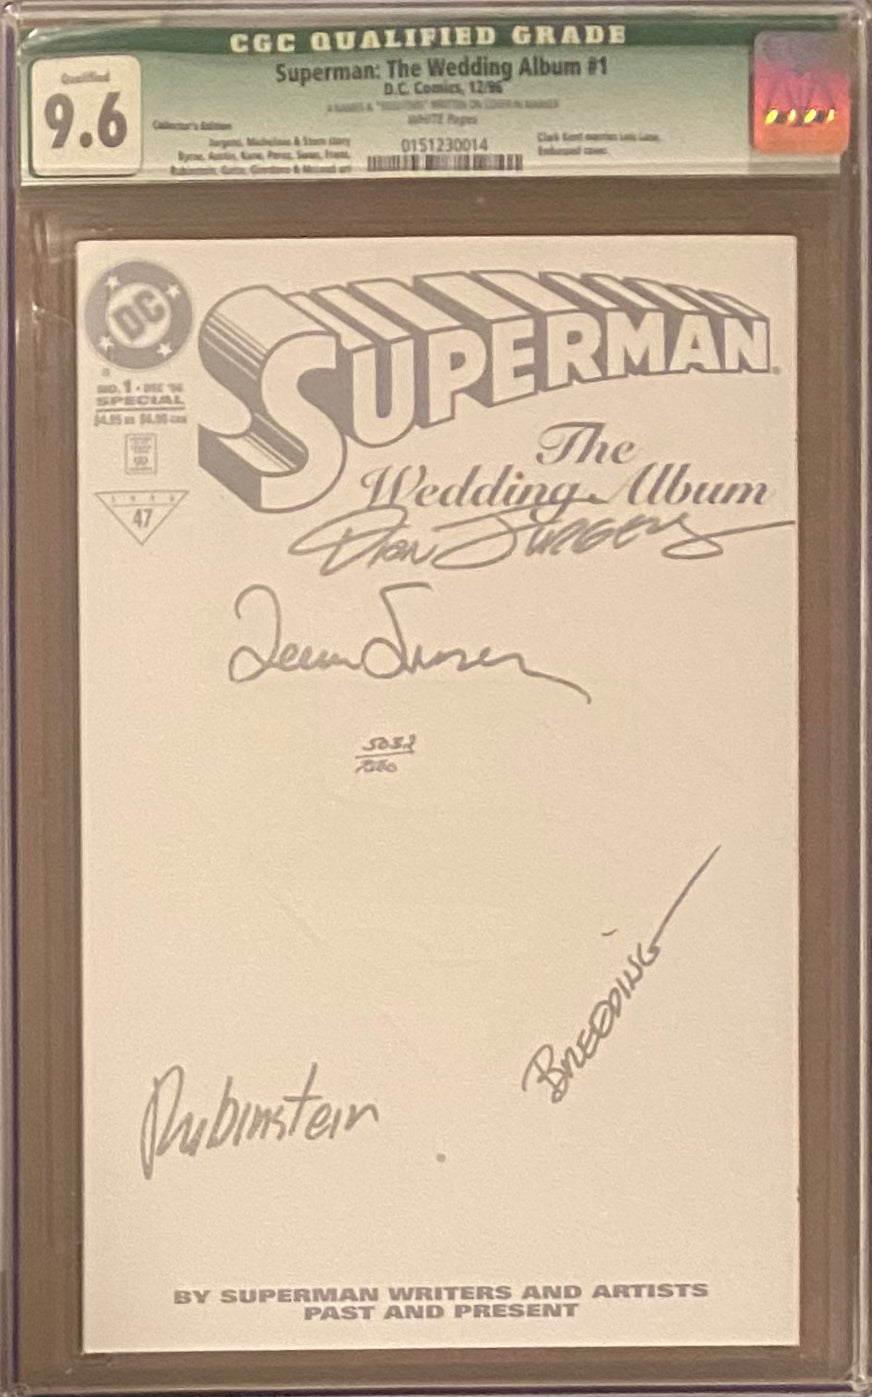 Superman: The Wedding Album #1 Collector's Edition CGC 9.6 Qualified